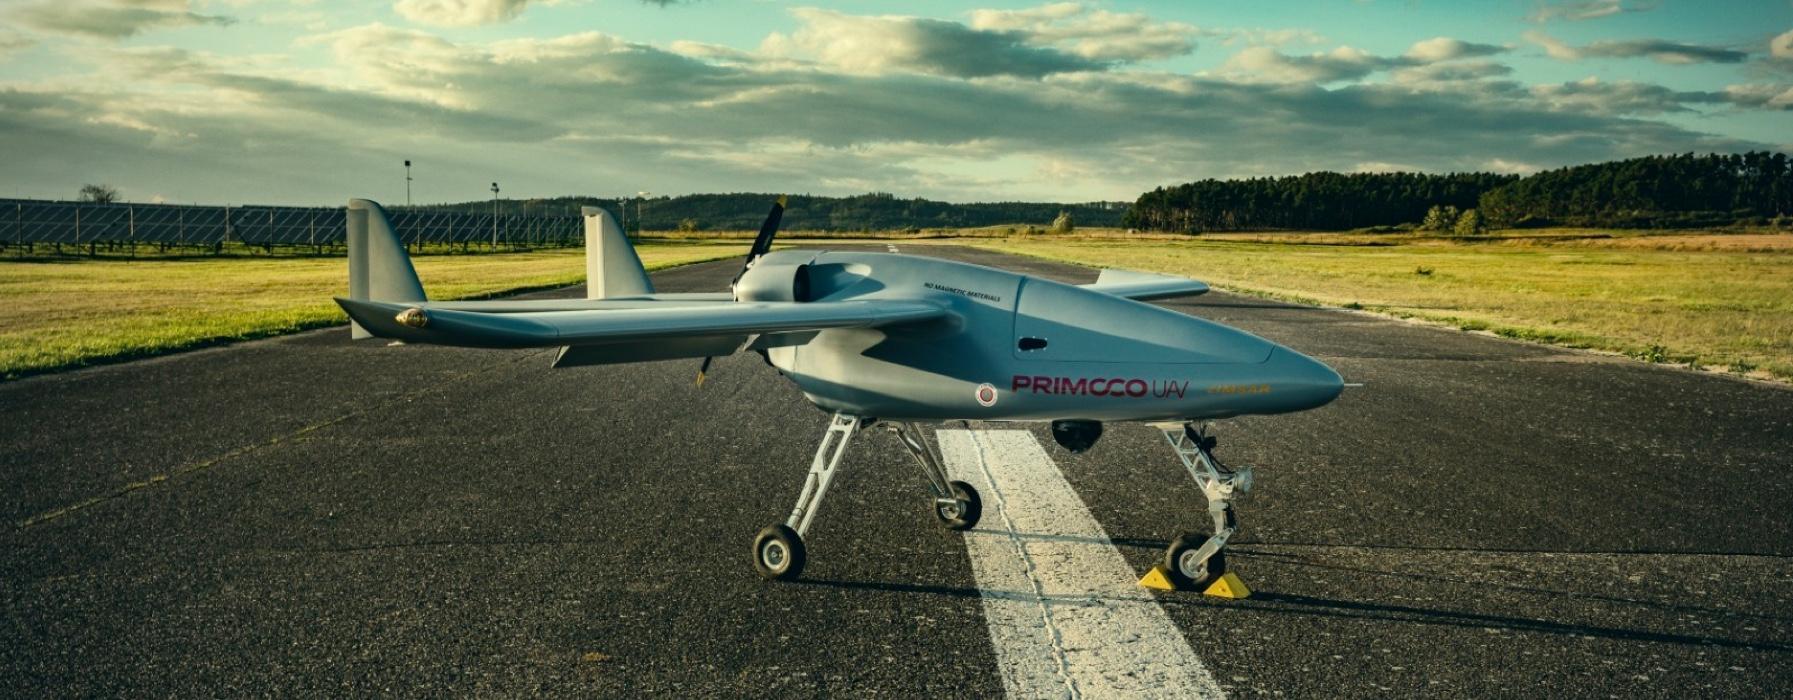 Primoco UAV ONE 150 Unmanned Aerial Vehicle